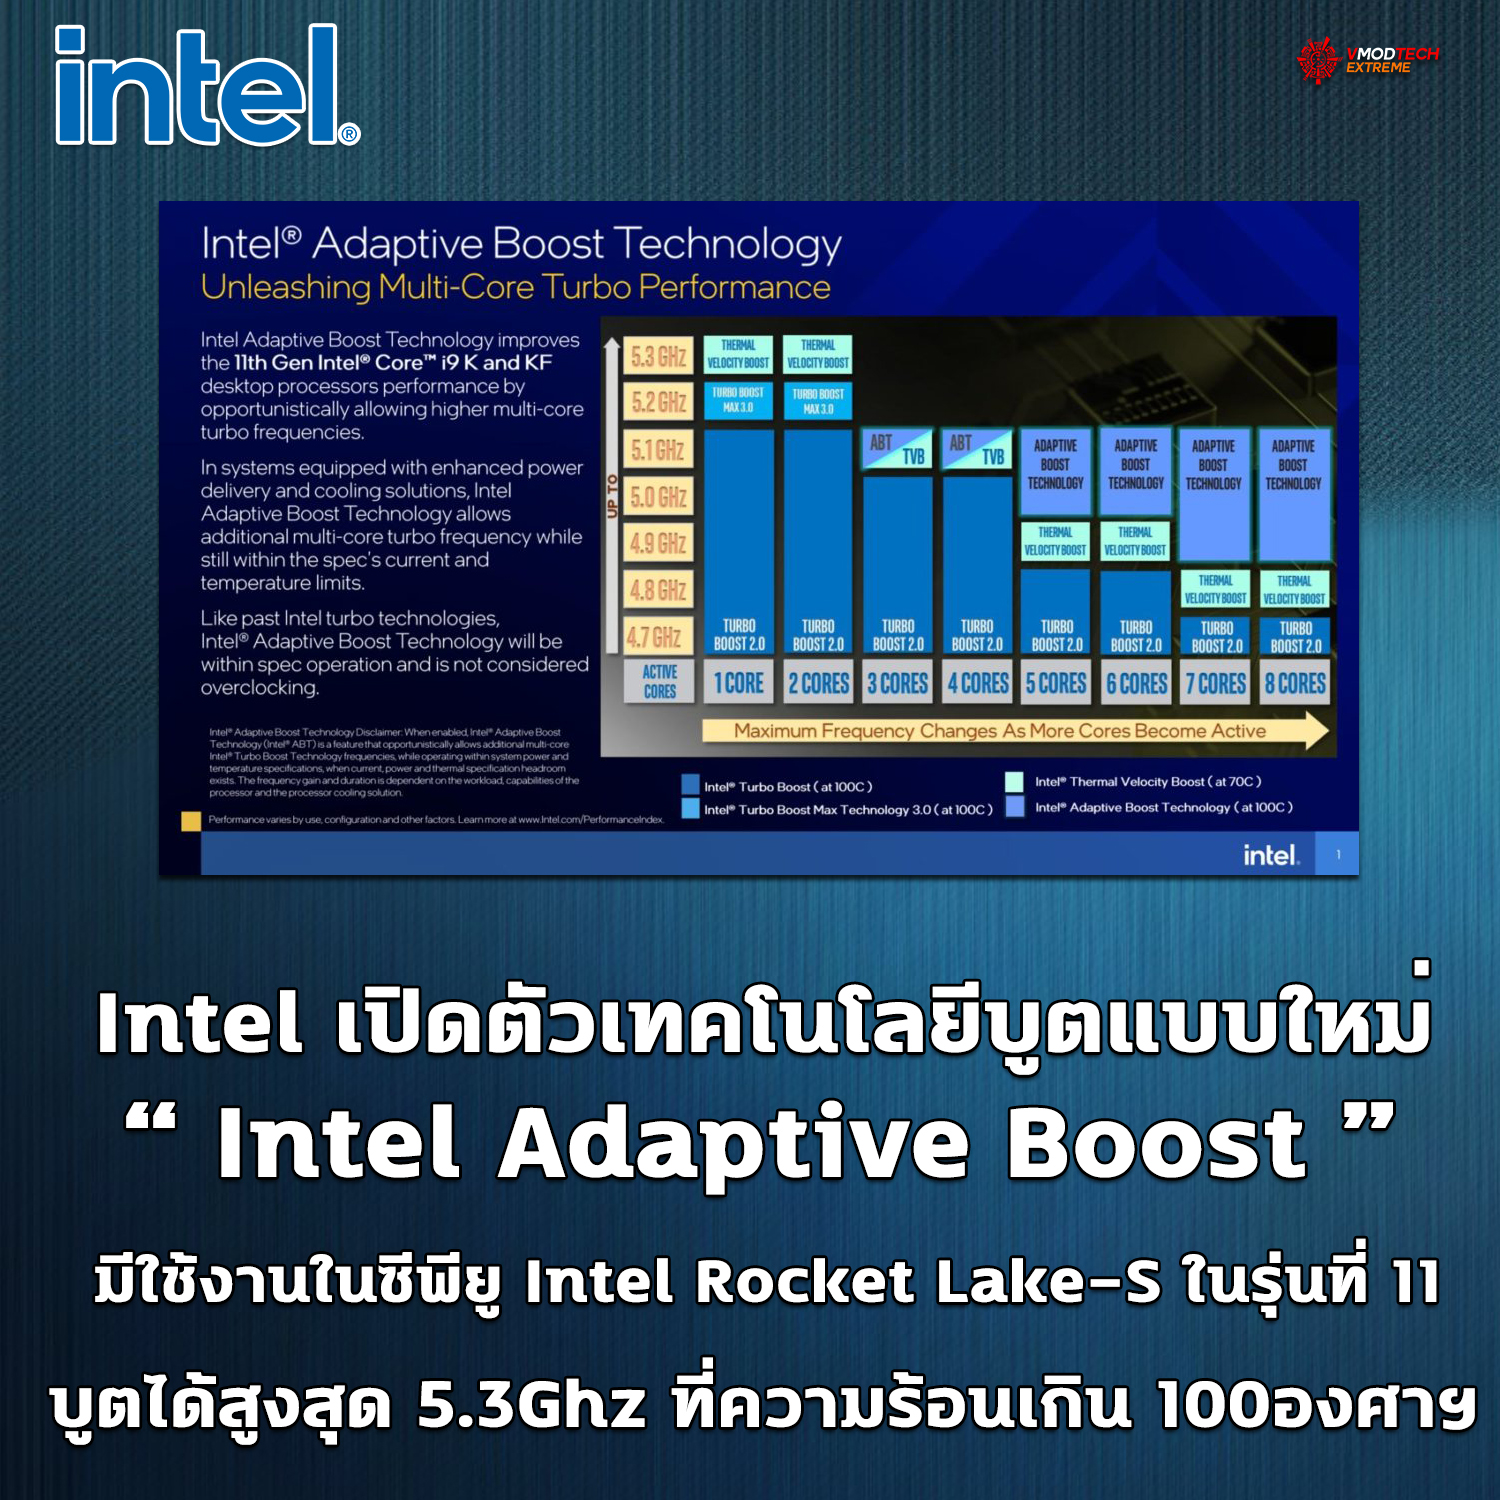 intel adaptive boost Intel เปิดตัวเทคโนโลยี Intel Adaptive Boost แบบใหม่ที่ใช้งานในซีพียู Intel Rocket Lake S ในรุ่นที่ 11 บูตได้สูงสุด 5.3Ghz ที่ความร้อนเกิน 100องศาฯ 